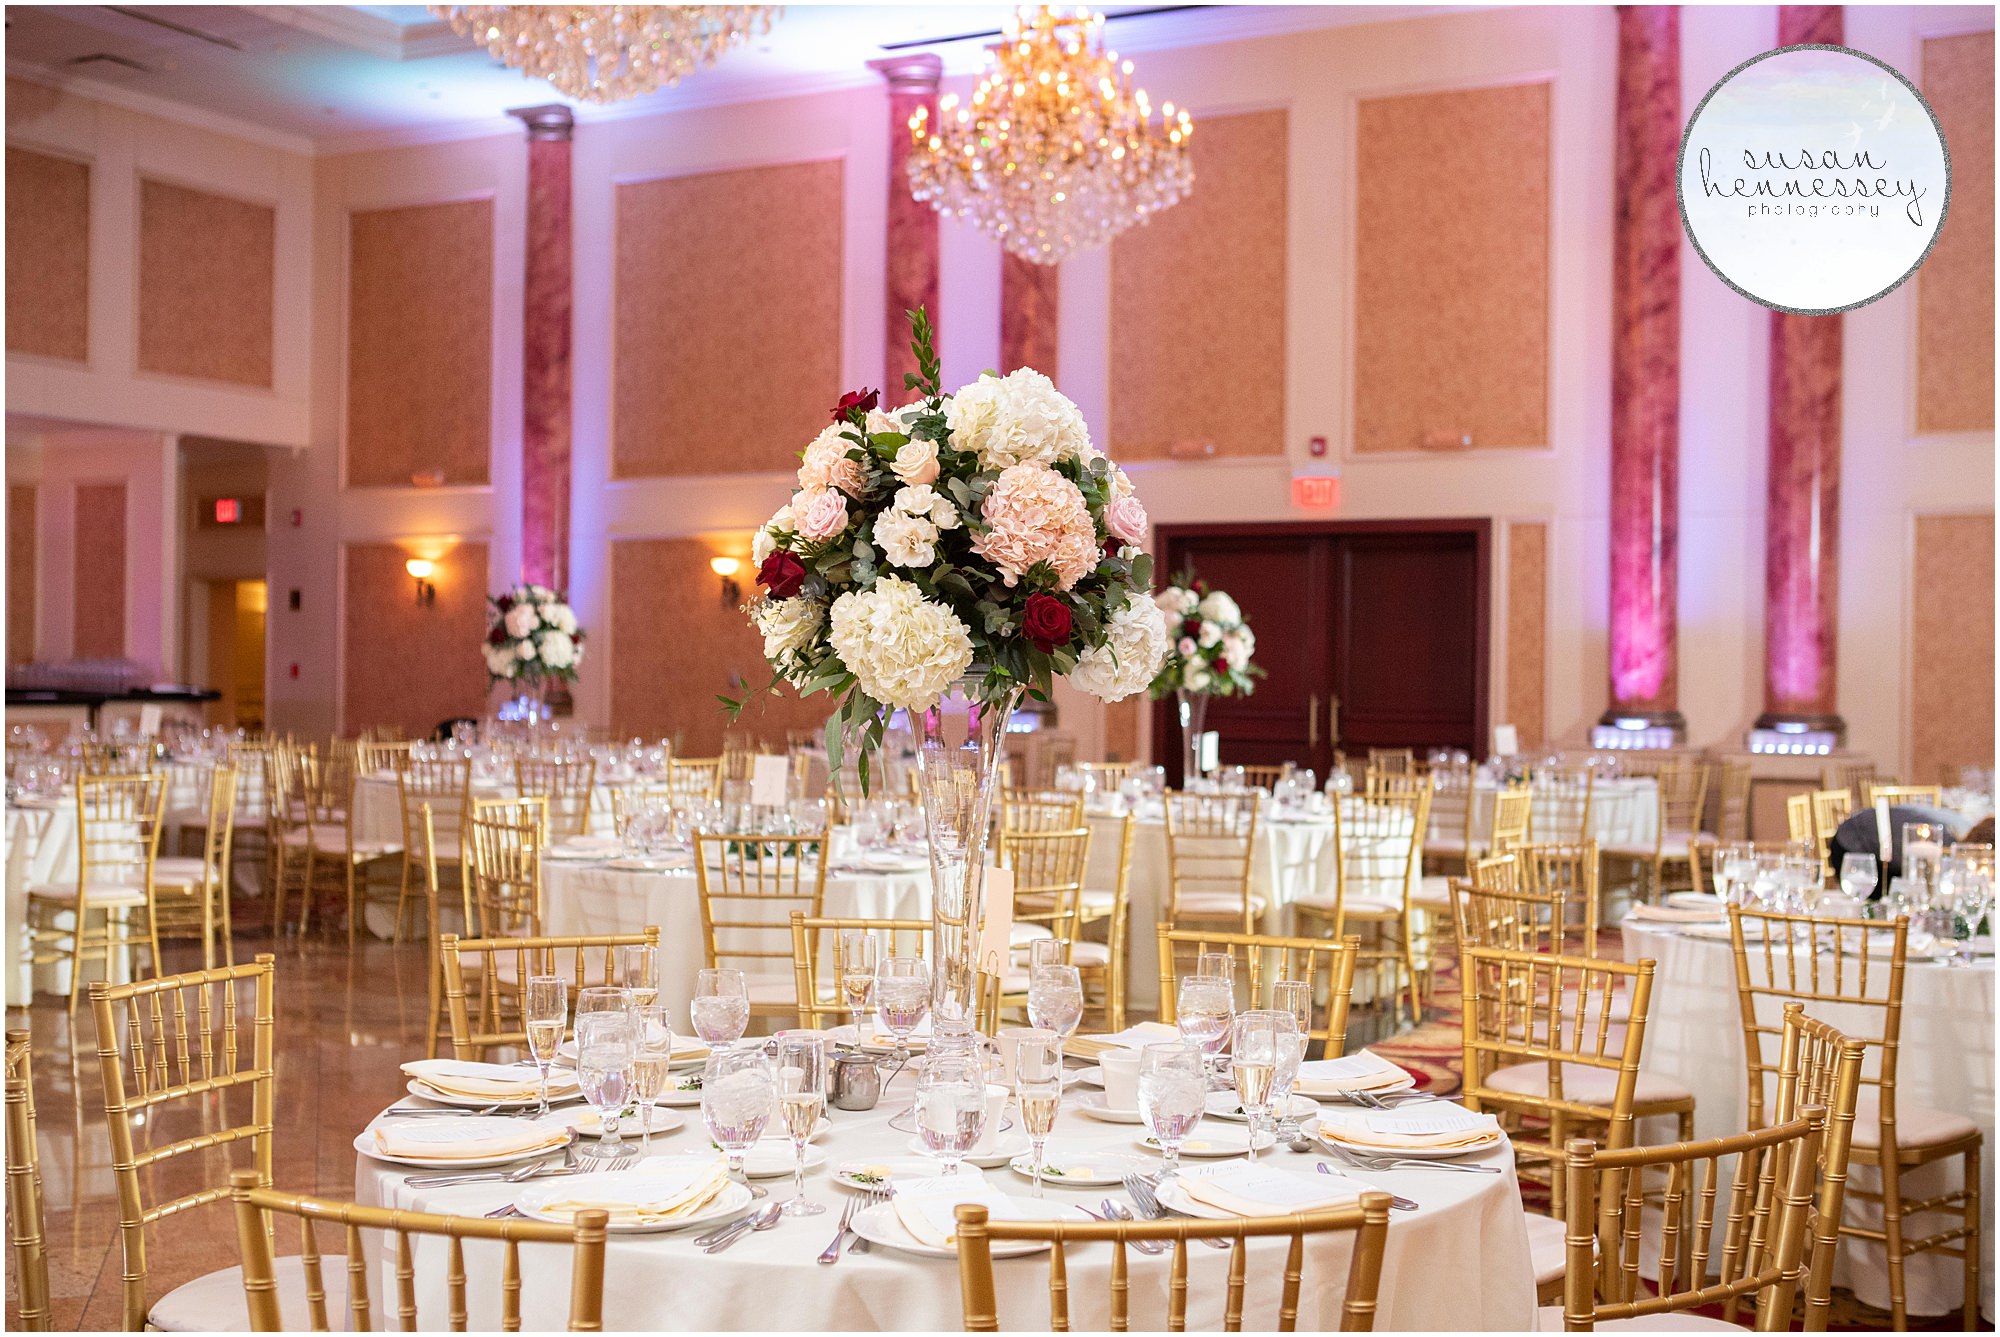 Ballroom details at the Merion wedding reception